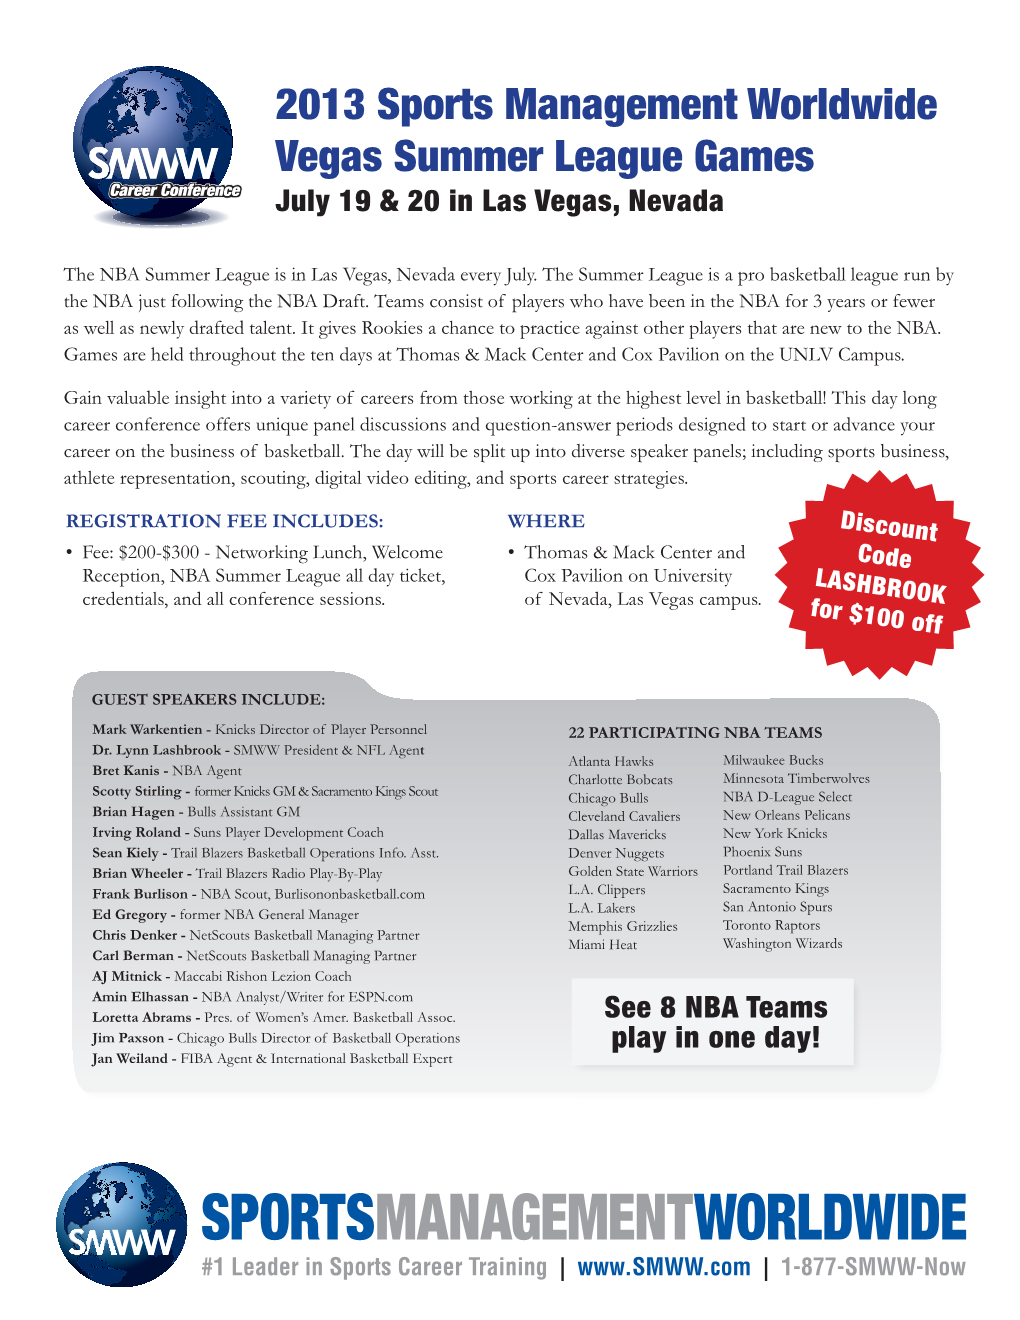 2013 Sports Management Worldwide Vegas Summer League Games July 19 & 20 in Las Vegas, Nevada